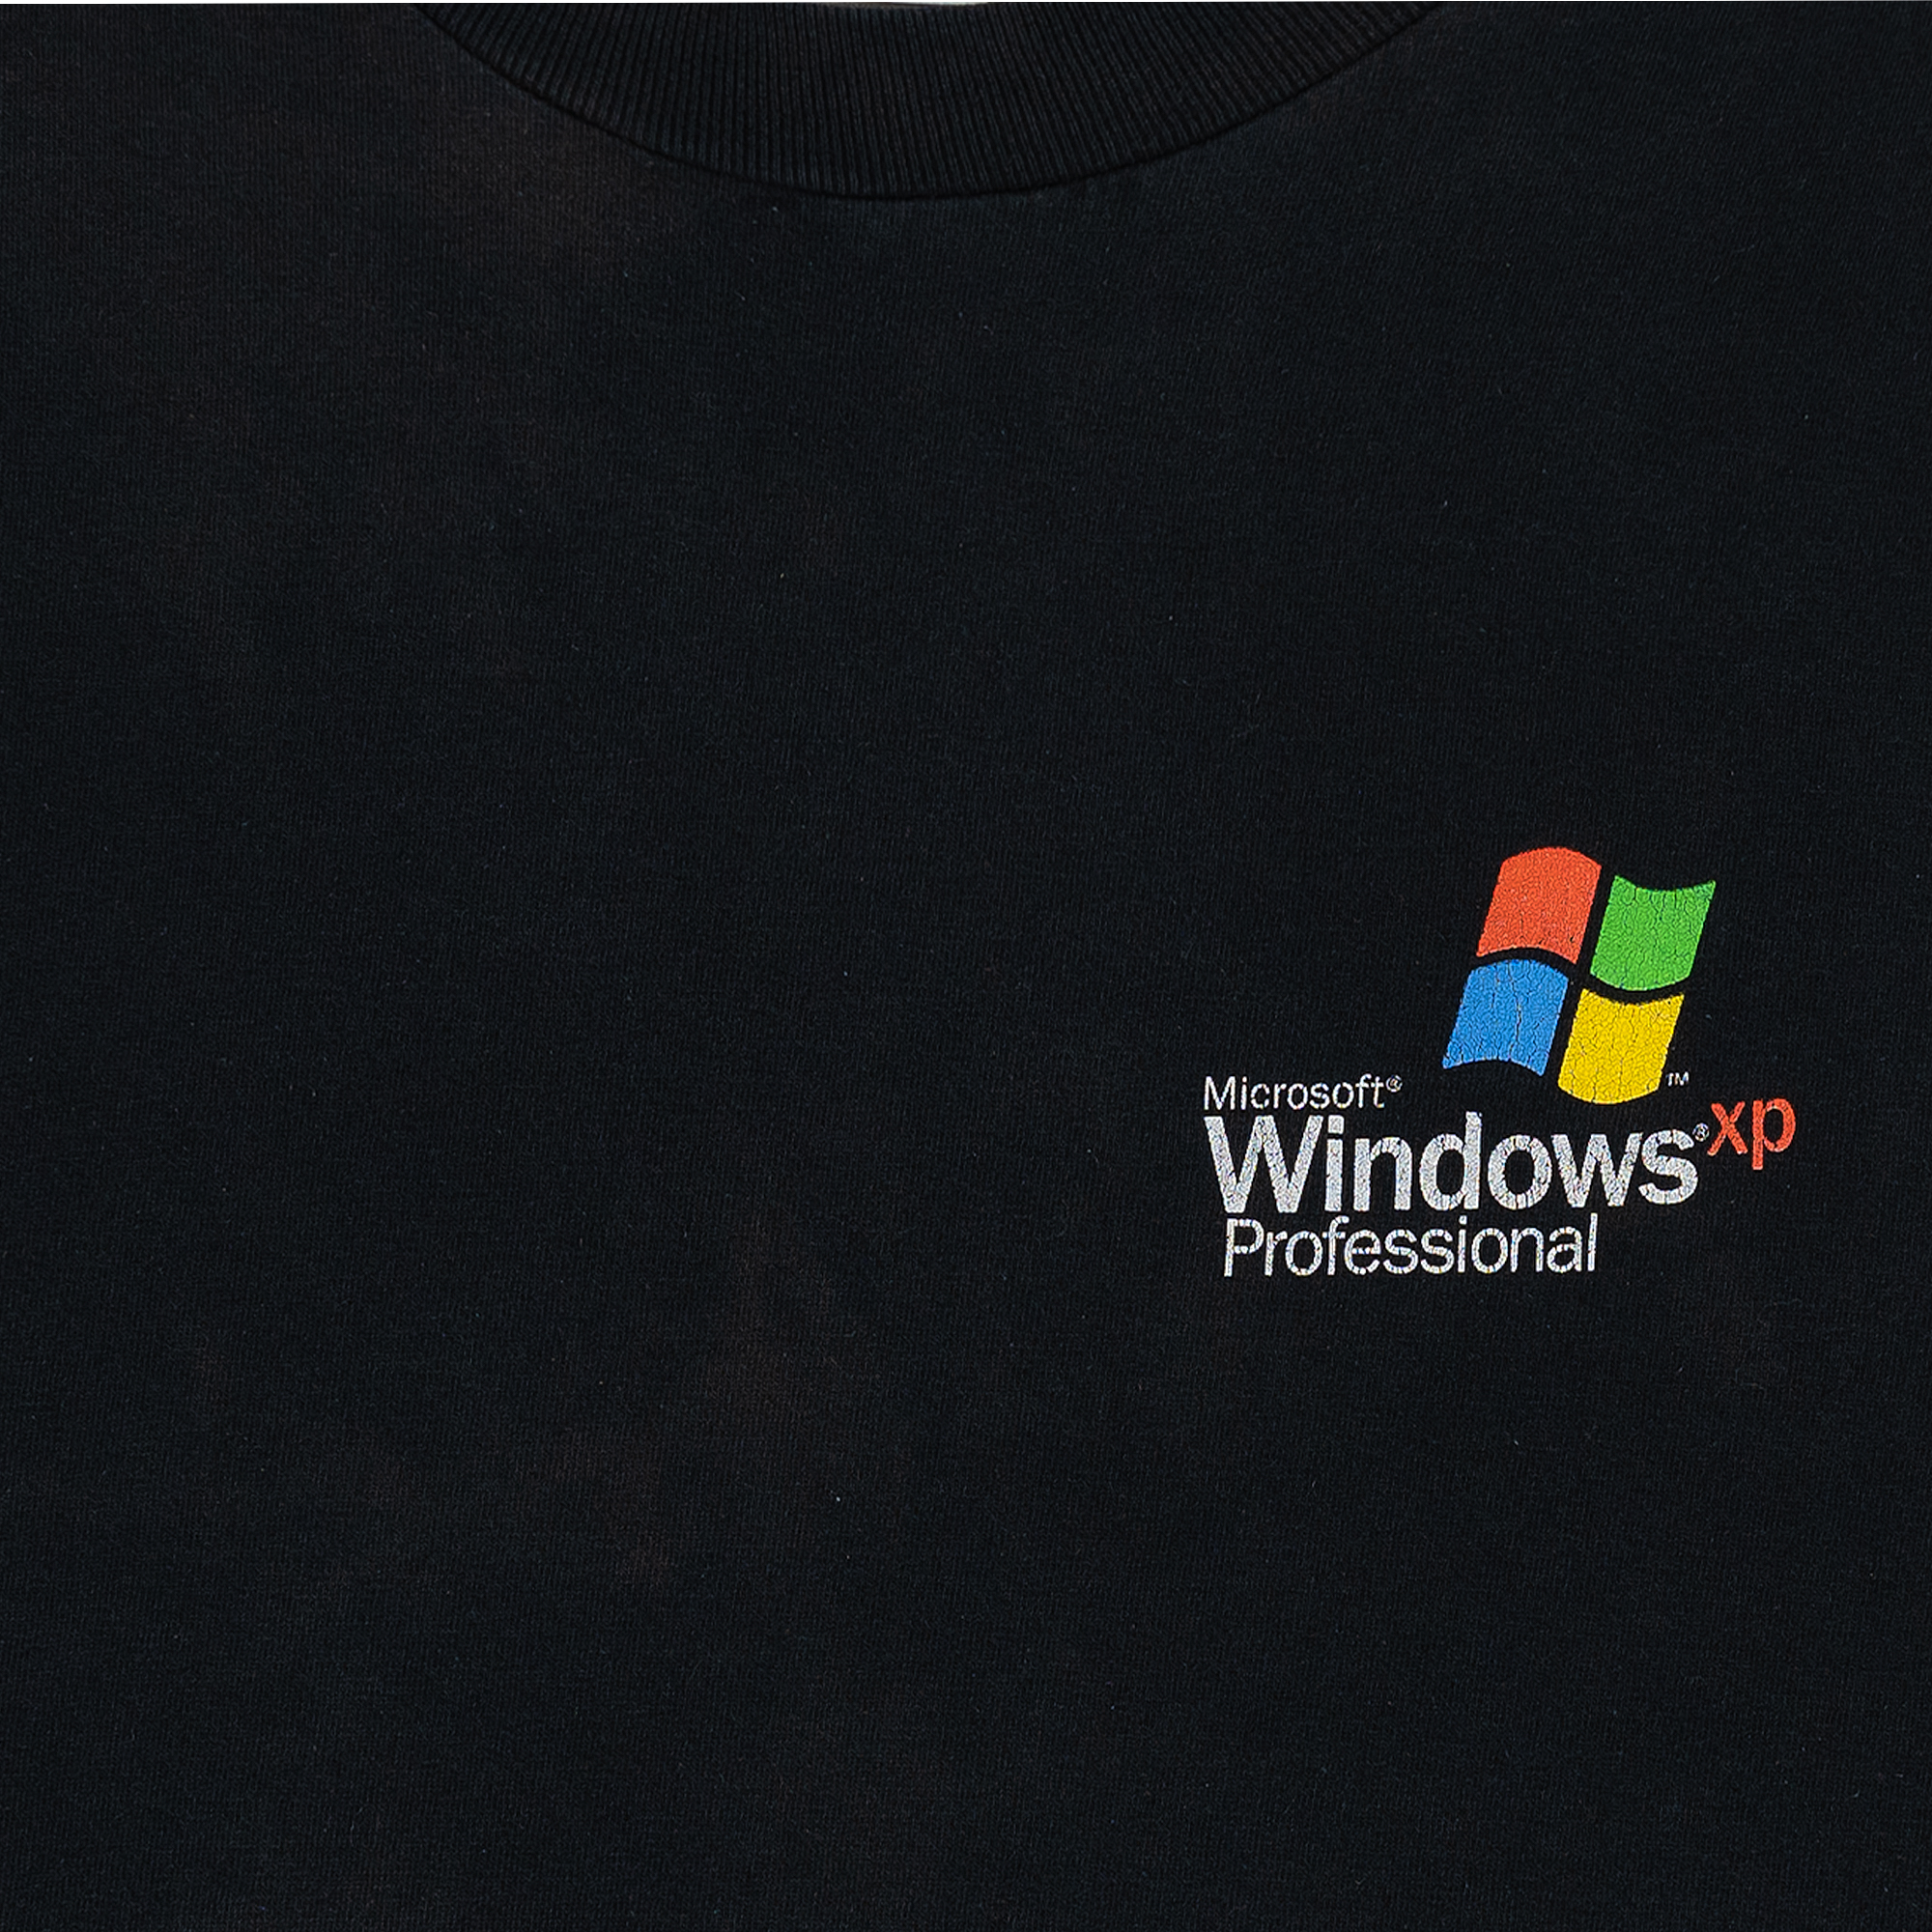 Microsoft Windows XP Professional Promo Tee Black-PLUS